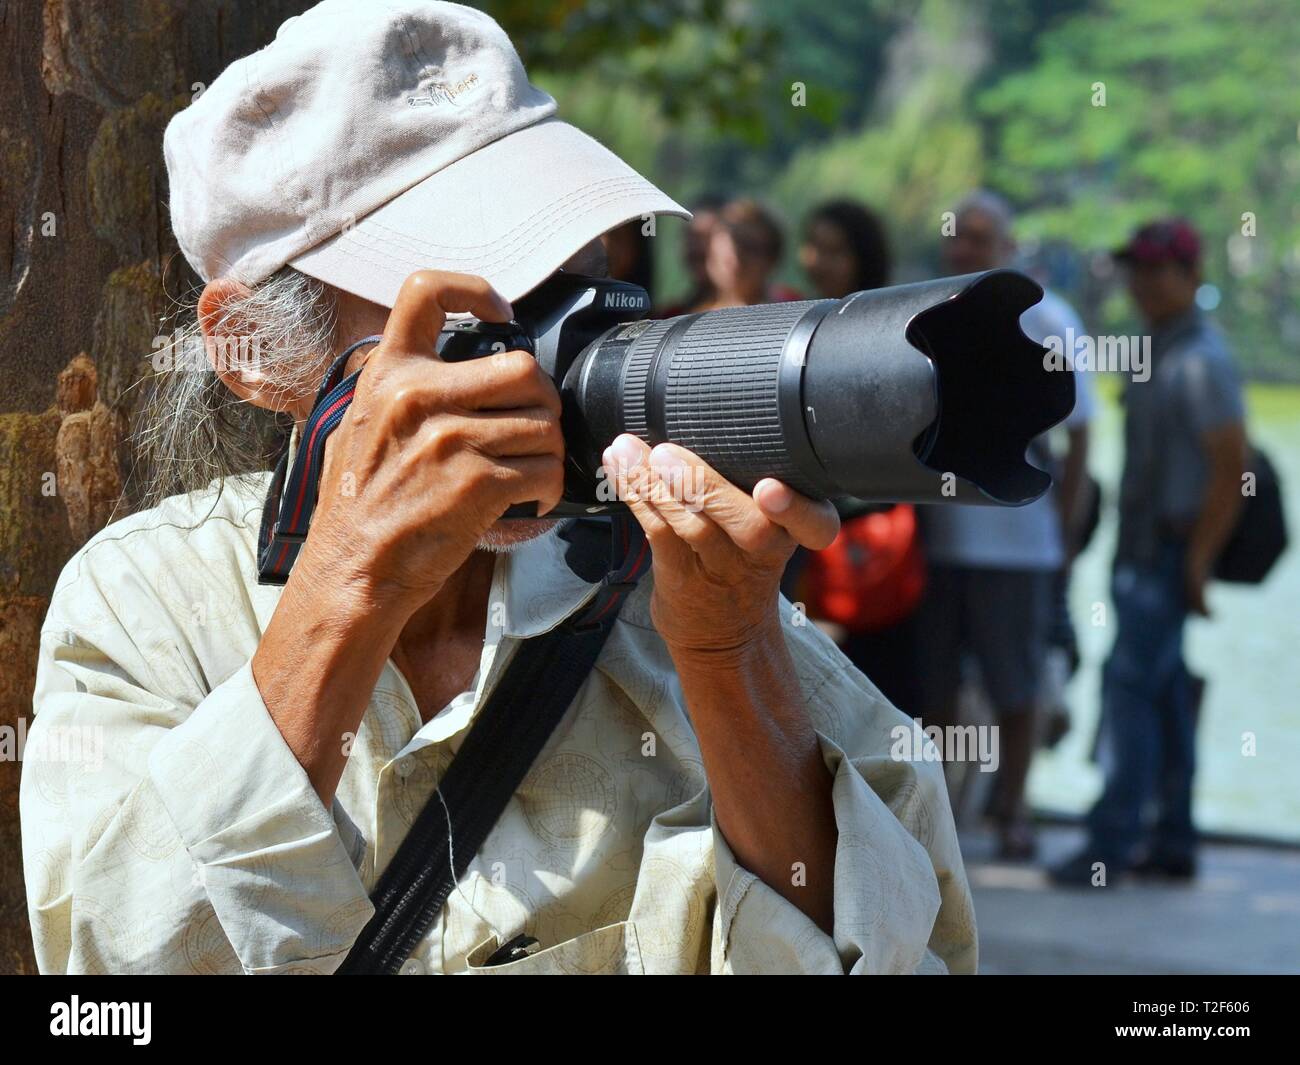 Elderly Vietnamese street photographer takes candid photos with his Nikon DSLR camera with a telephoto lens. Stock Photo